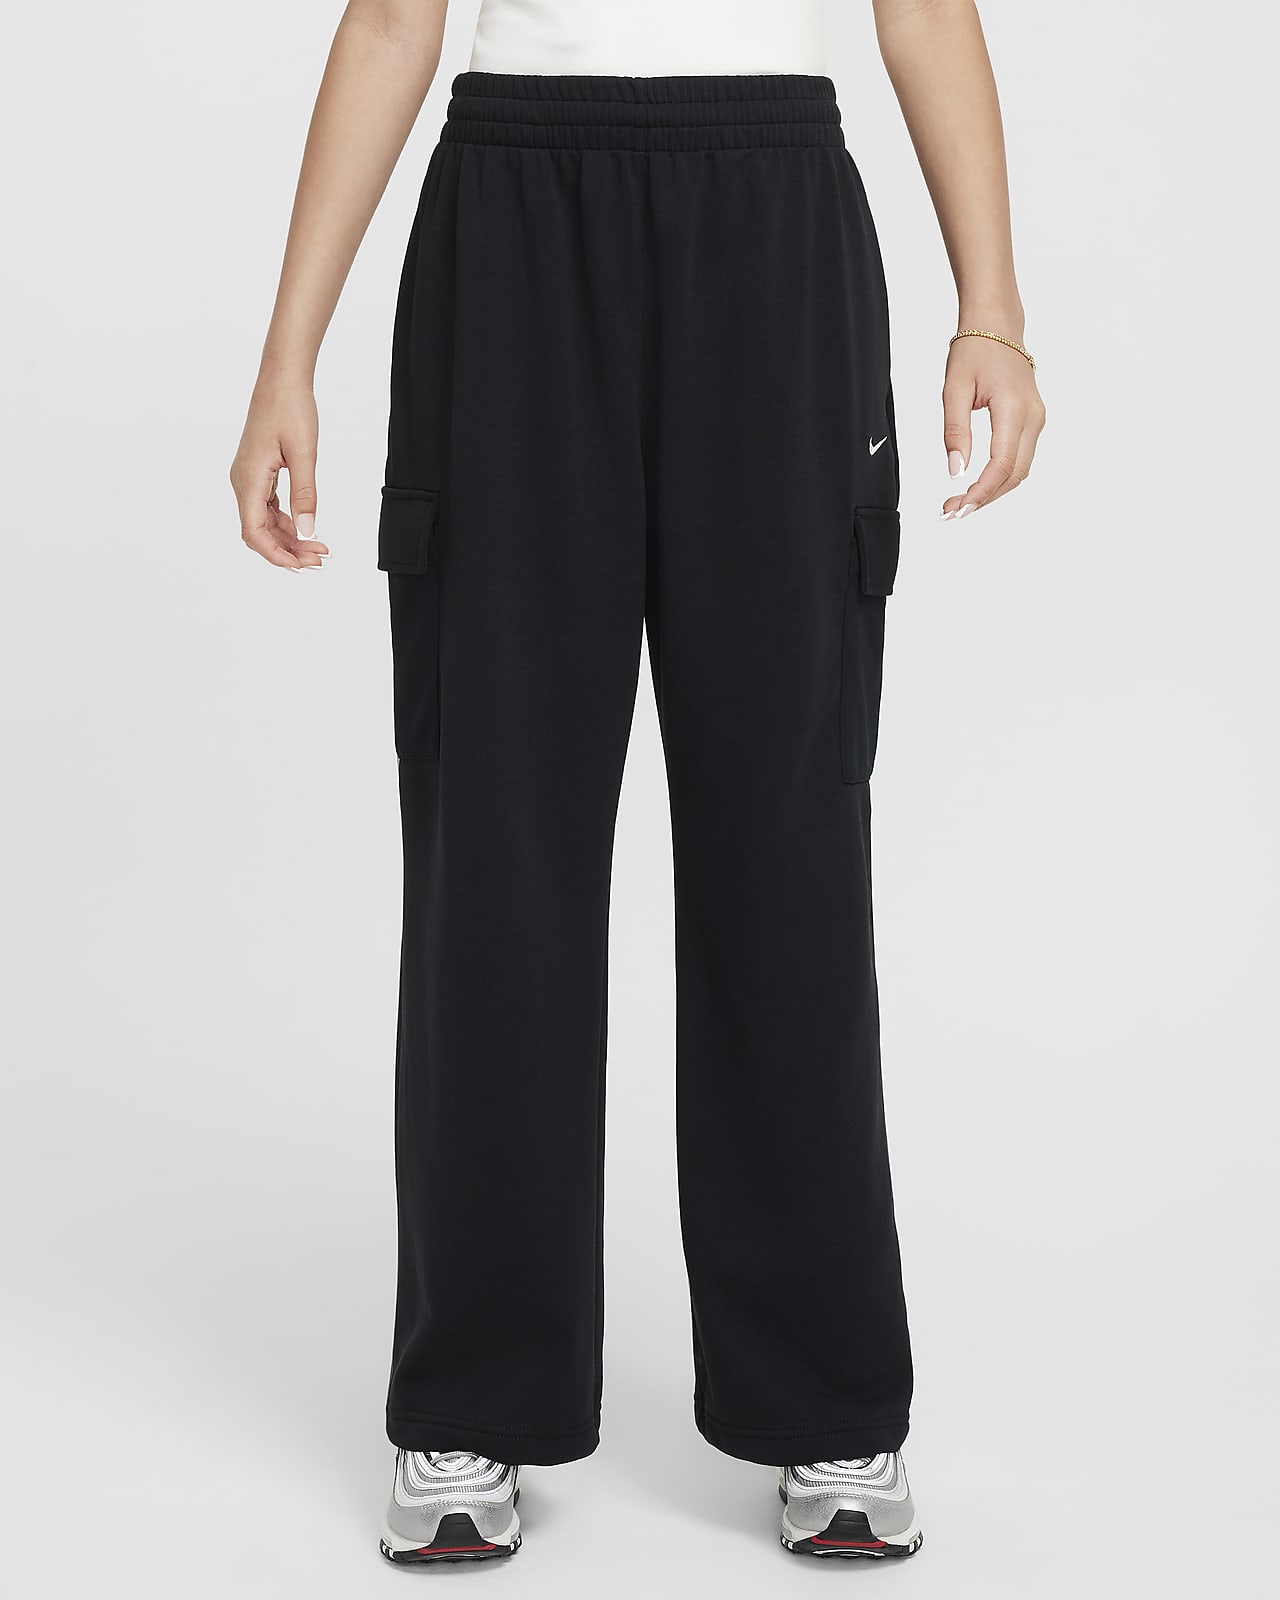 Pantaloni oversize in fleece Dri-FIT Nike Sportswear – Bambina/Ragazza